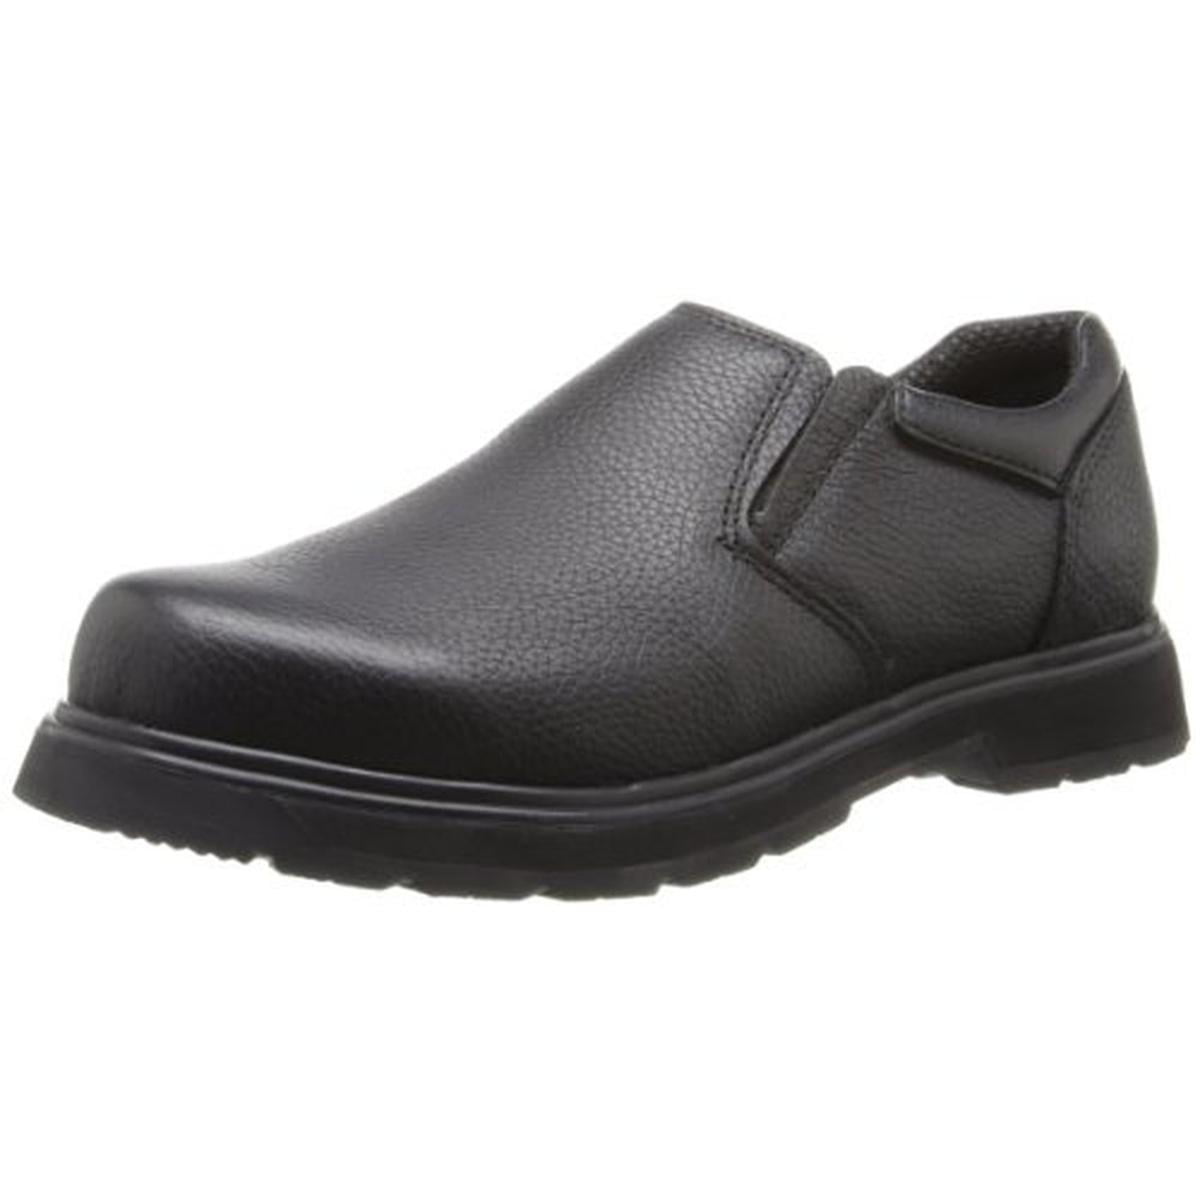 Dr. Scholl's Shoes - Dr. Scholl's Mens Winder Leather Slip Resistant ...